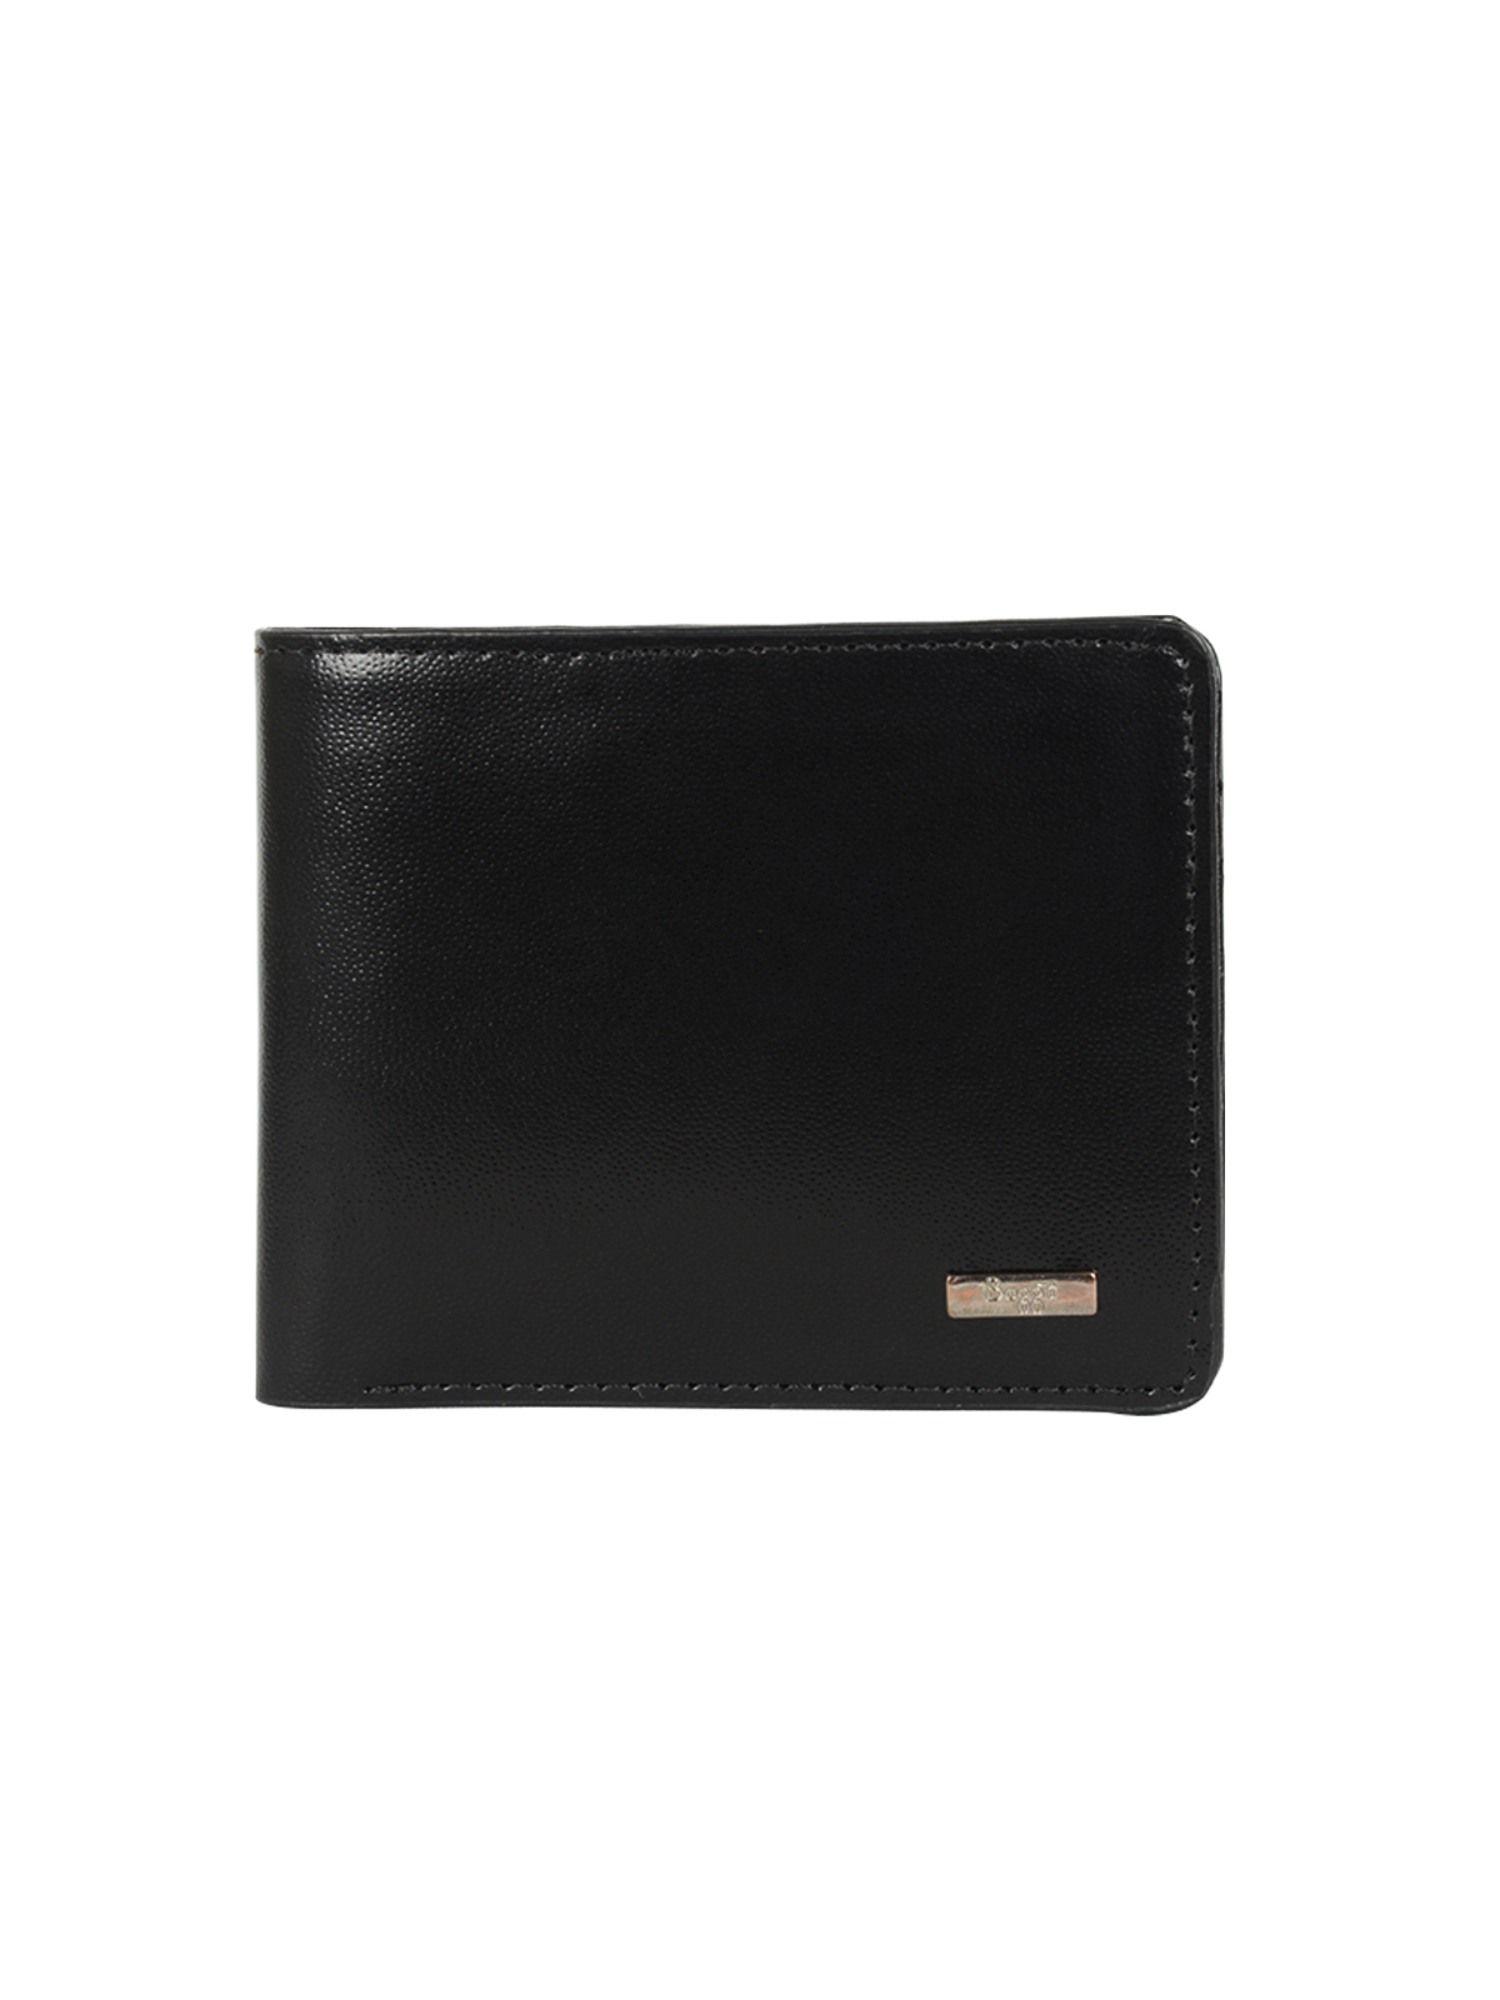 twine-black-small-wallet